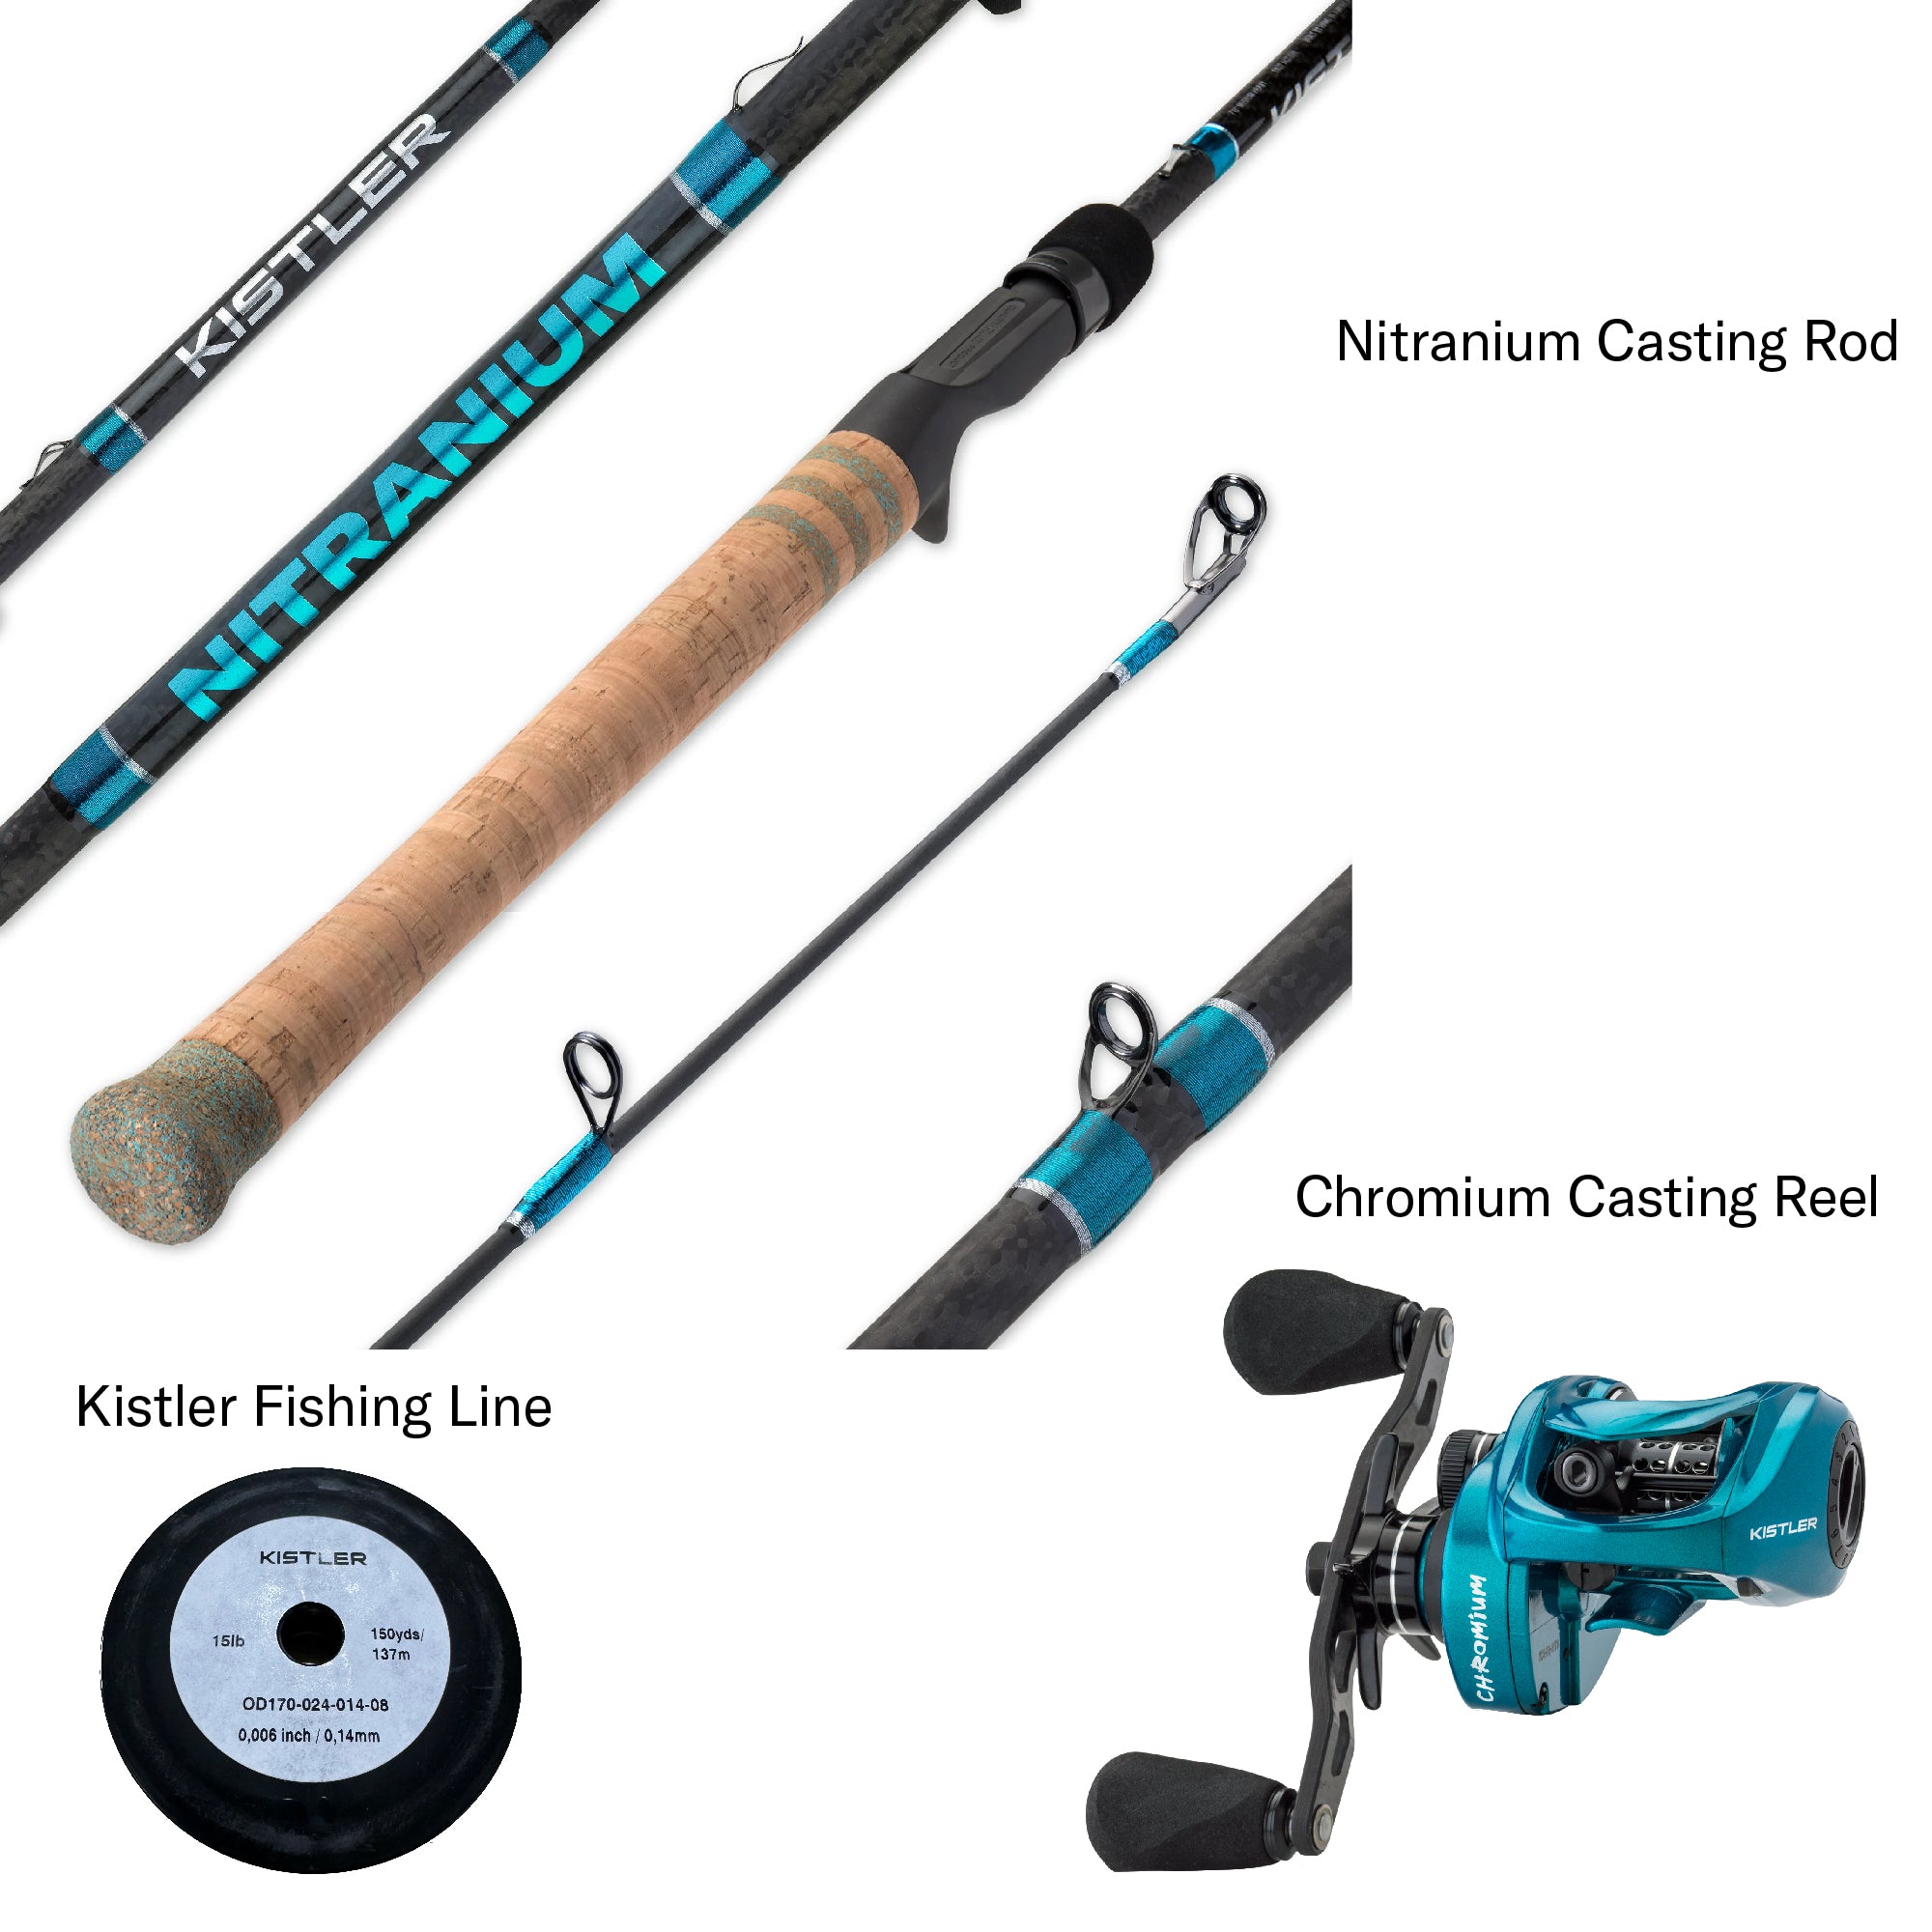 Nitranium Casting Rod, Chromium Reel, and Fishing Line – KISTLER Fishing